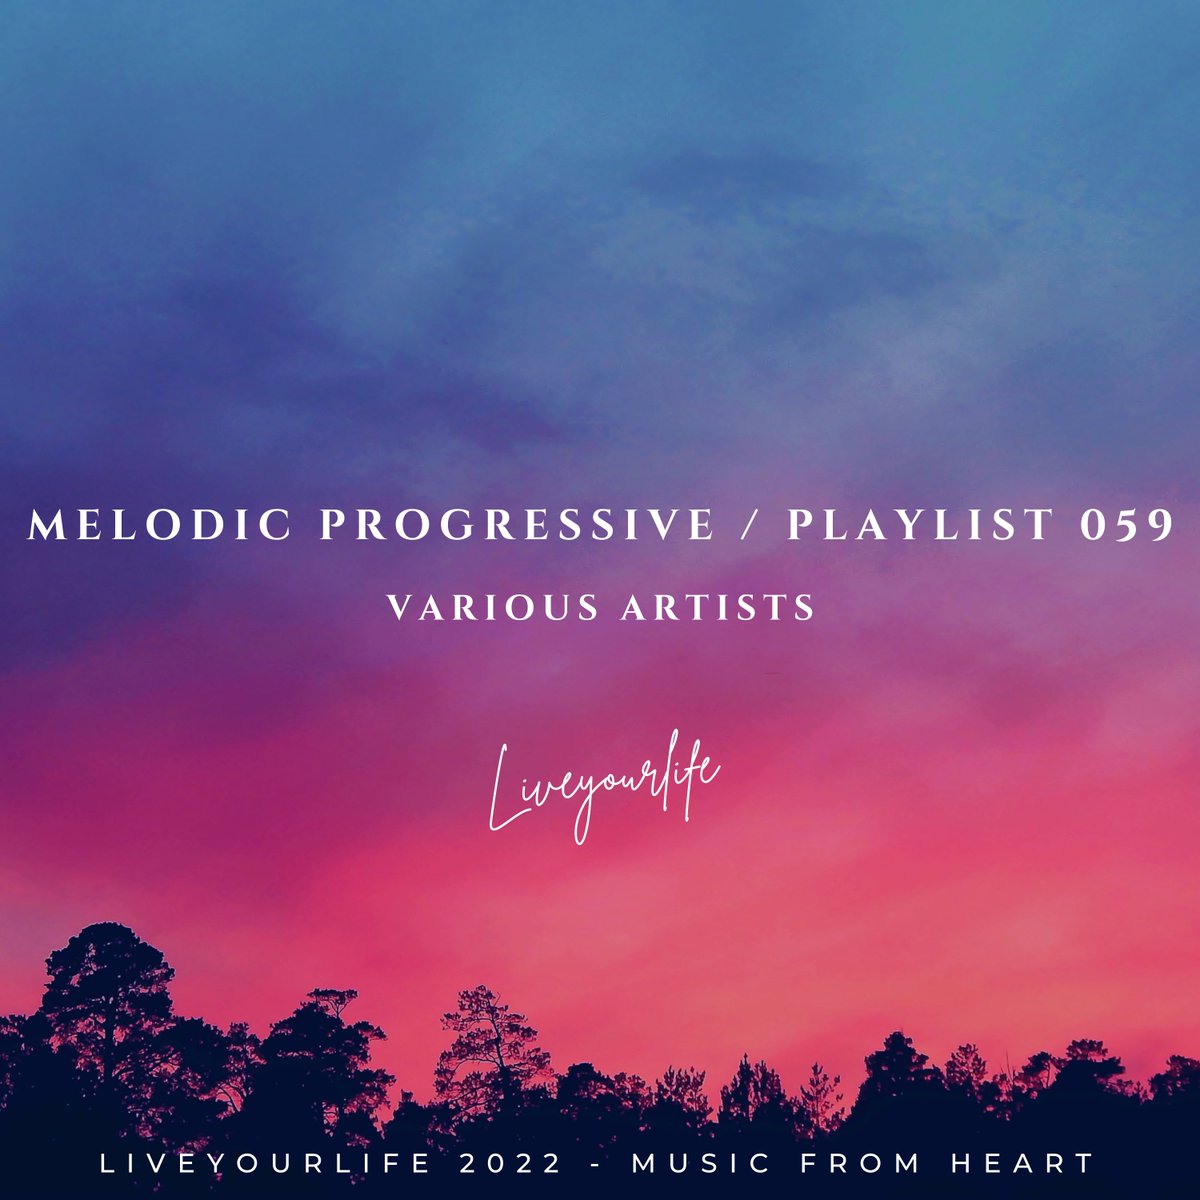 🟣NEW #SpotifyPlaylist!

Listen here:
open.spotify.com/playlist/4rJgt…

#Spotify #progressivehouse #outnow #music #progressivehousemusic #spotifymusic #playlist #newplaylist #musicplaylists #electronicmusic #melodicprogressivehouse #melodic #Liveyourlife